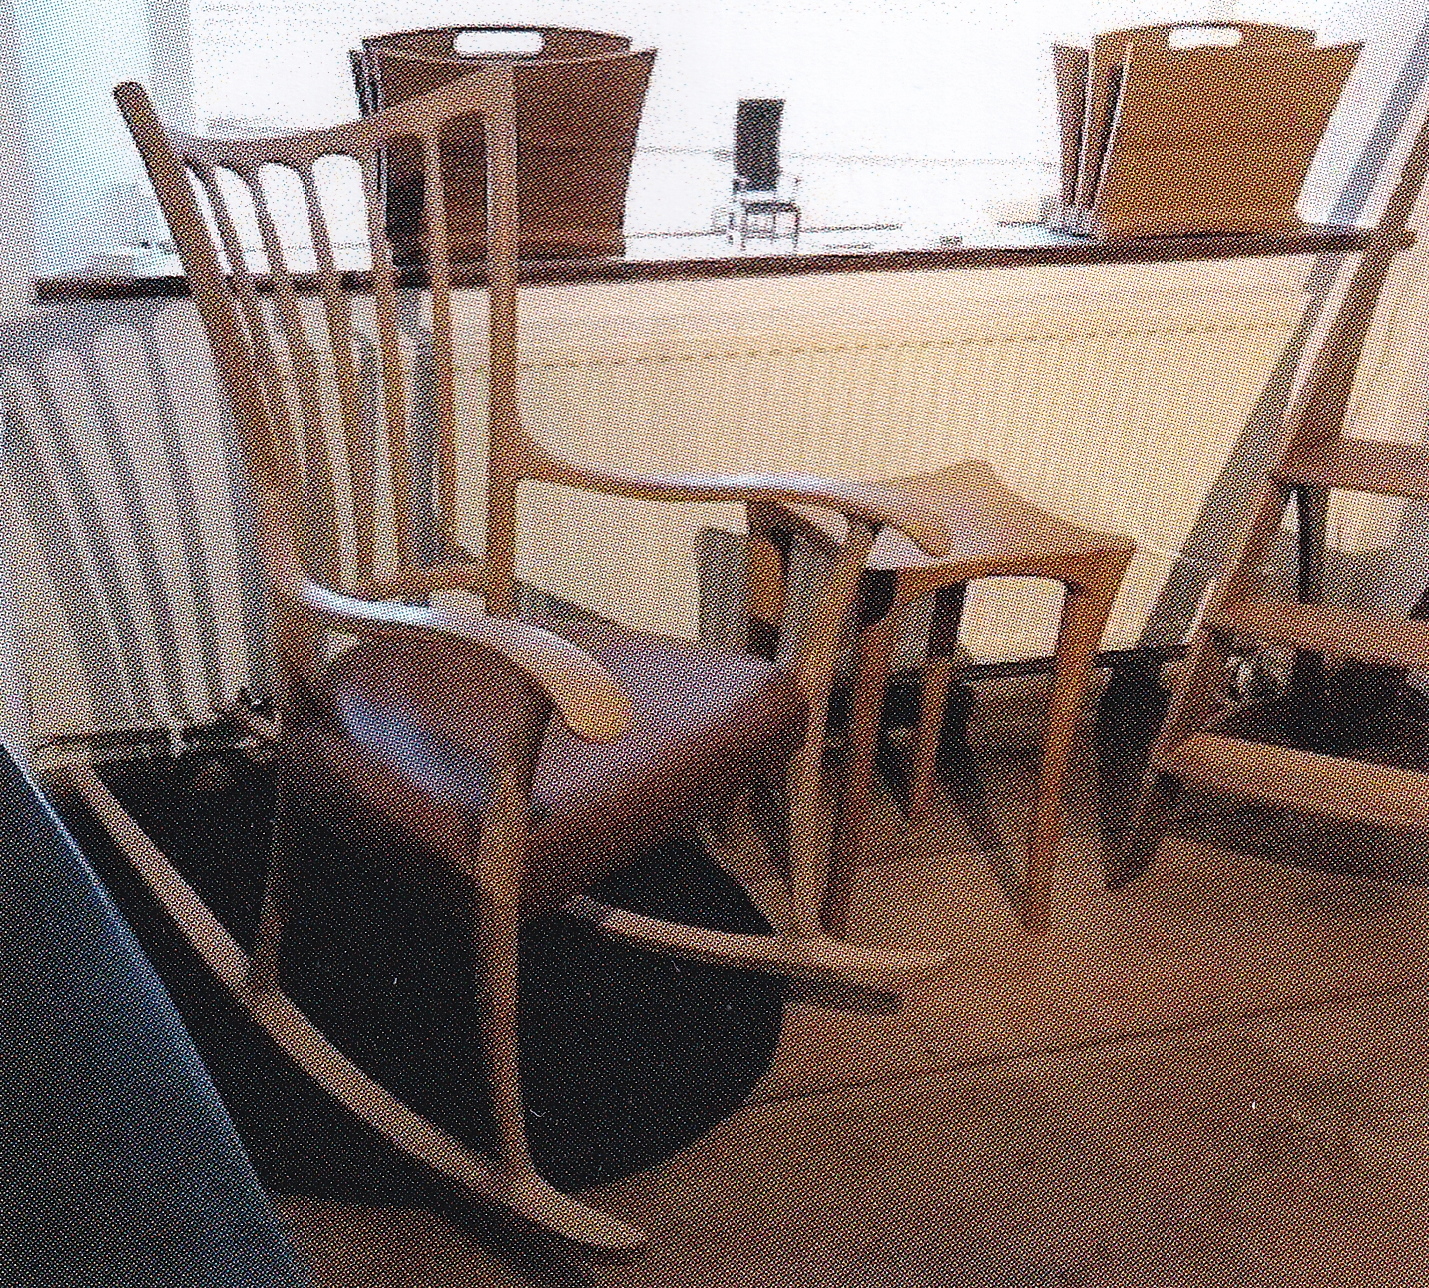 Furniture at the Workshop